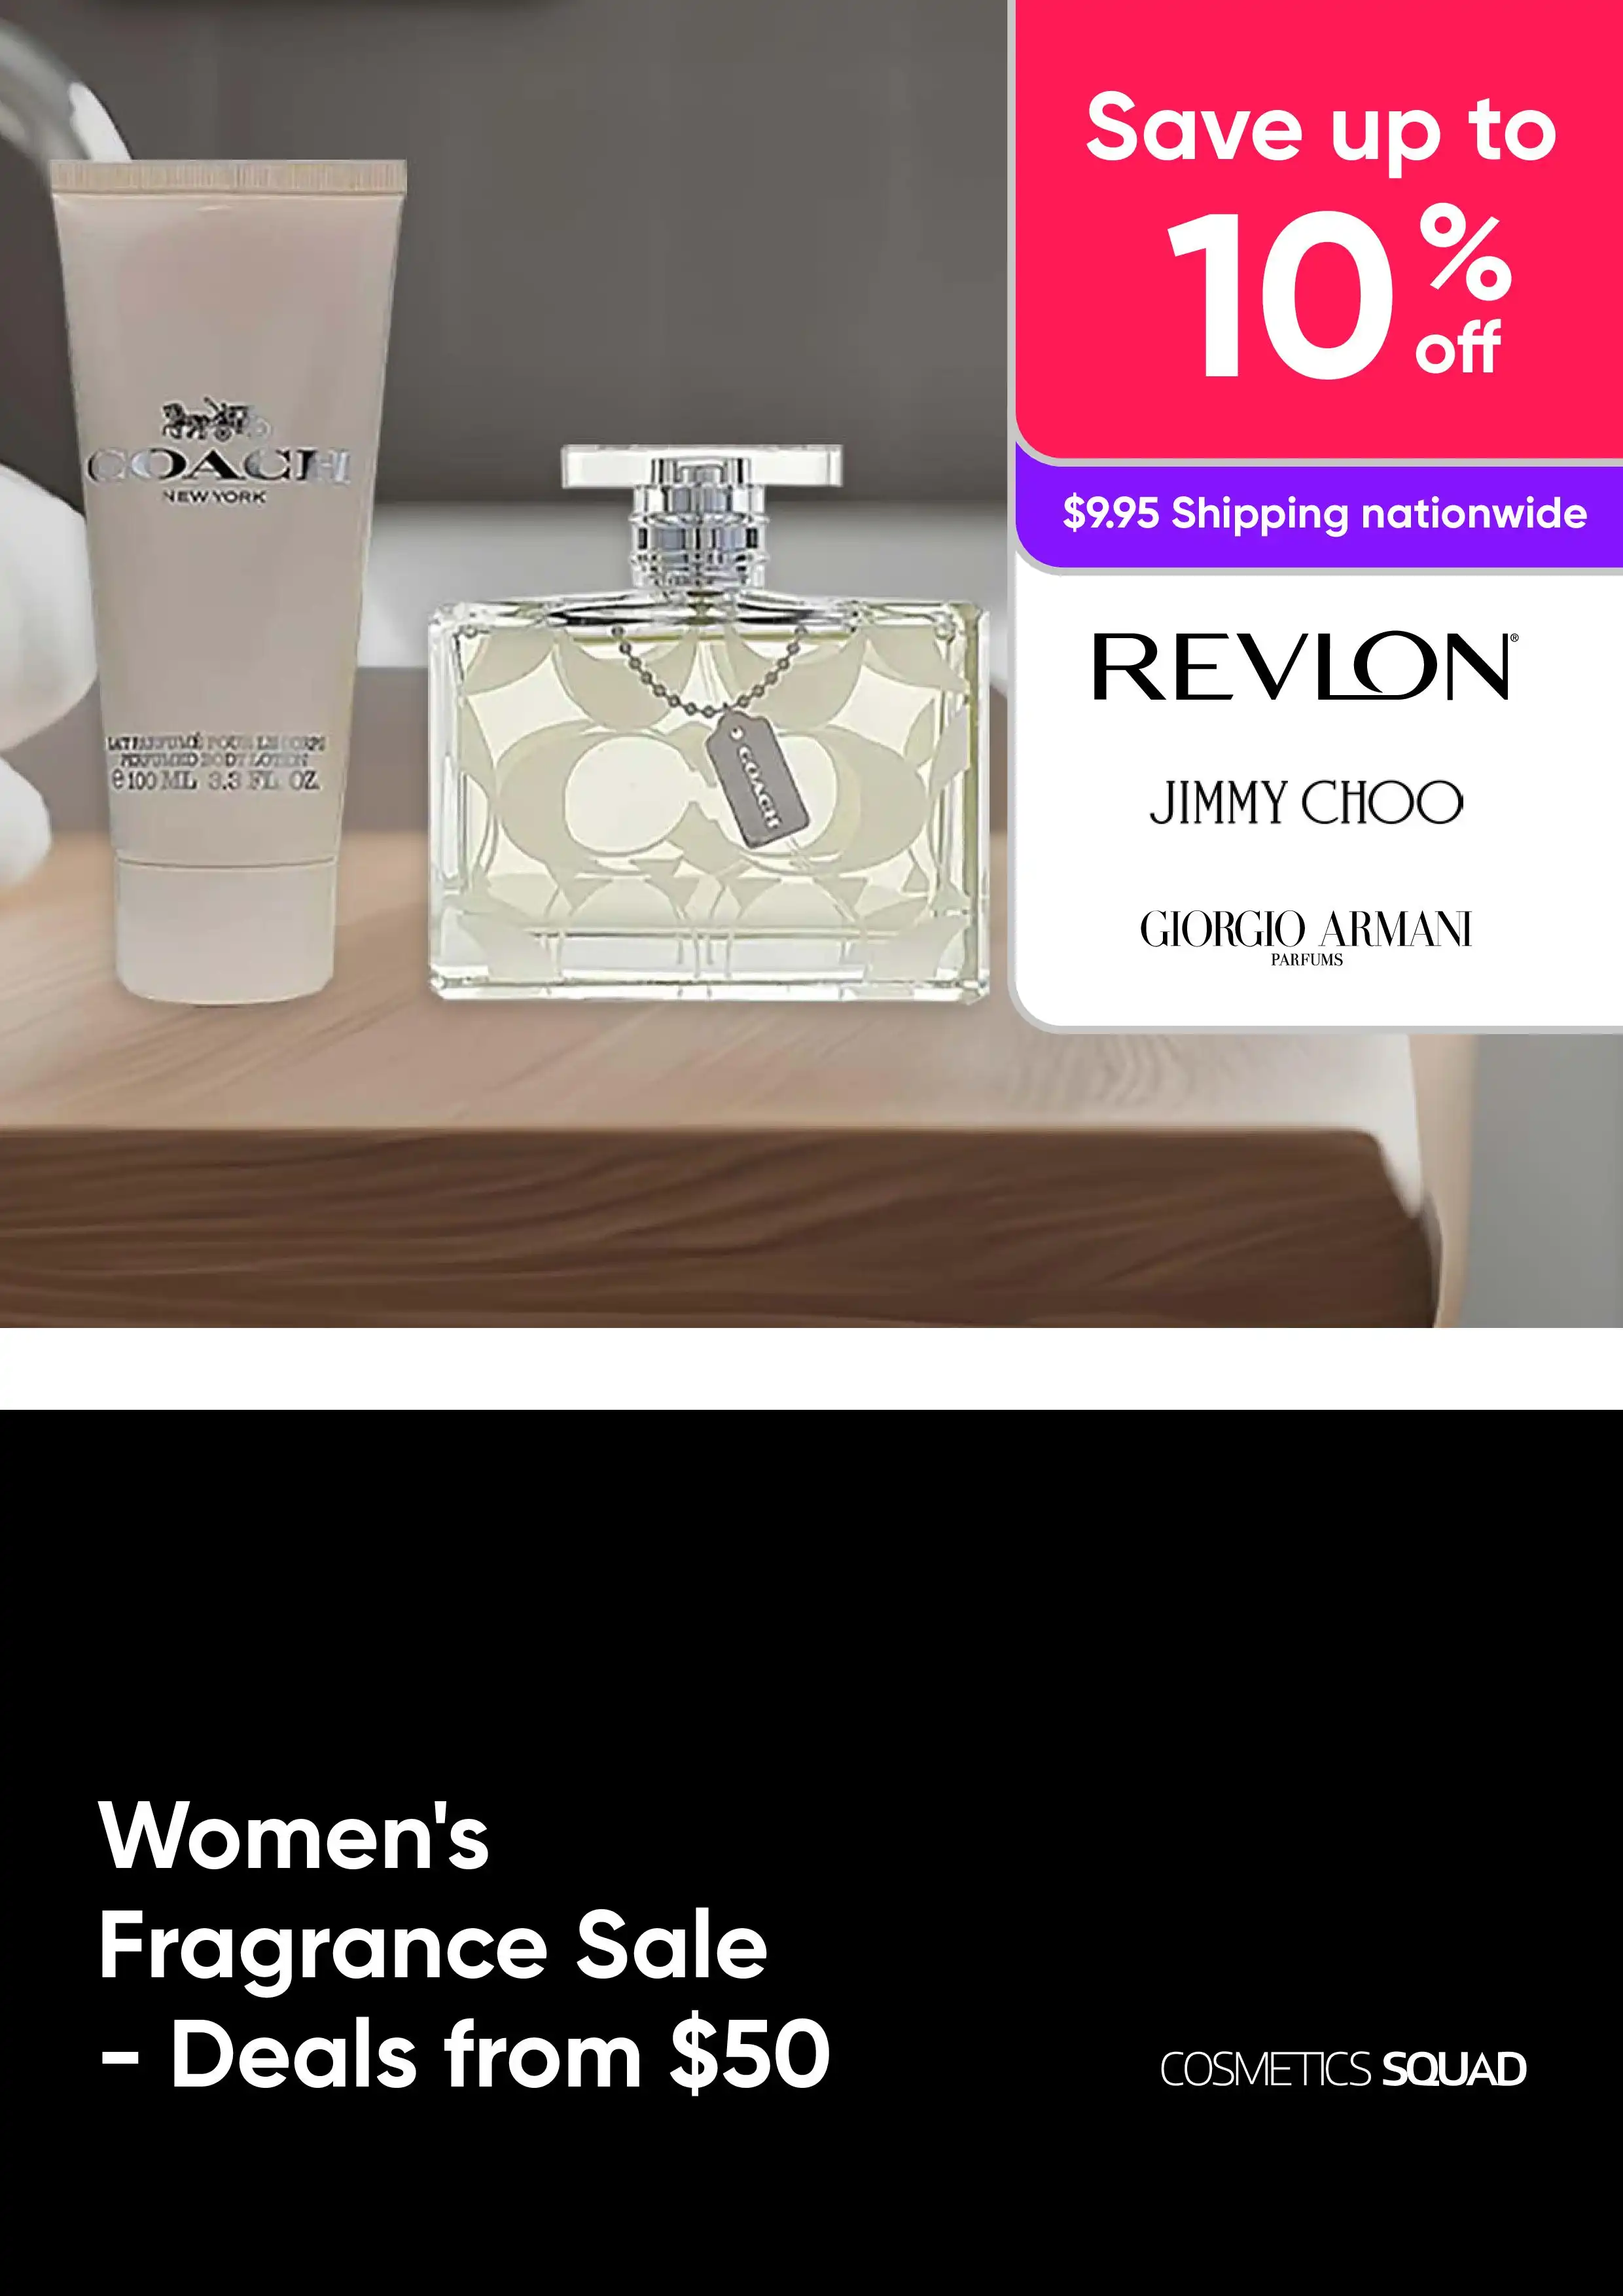 Women's Fragrance Sale - Revlon, Jimmy Choo, Giorgio Armani - Deals from $50